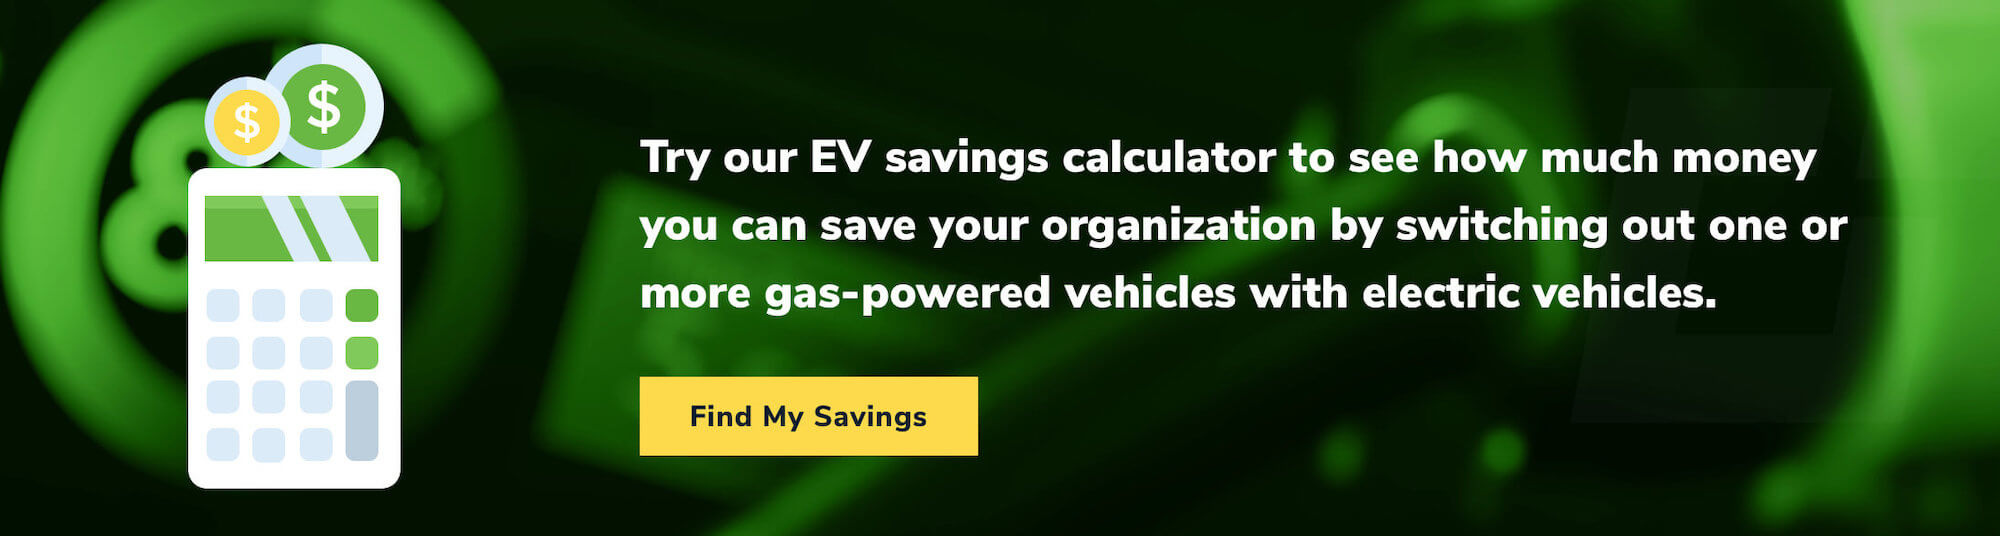 EV-Fleet-Savings-Calculator-CTA